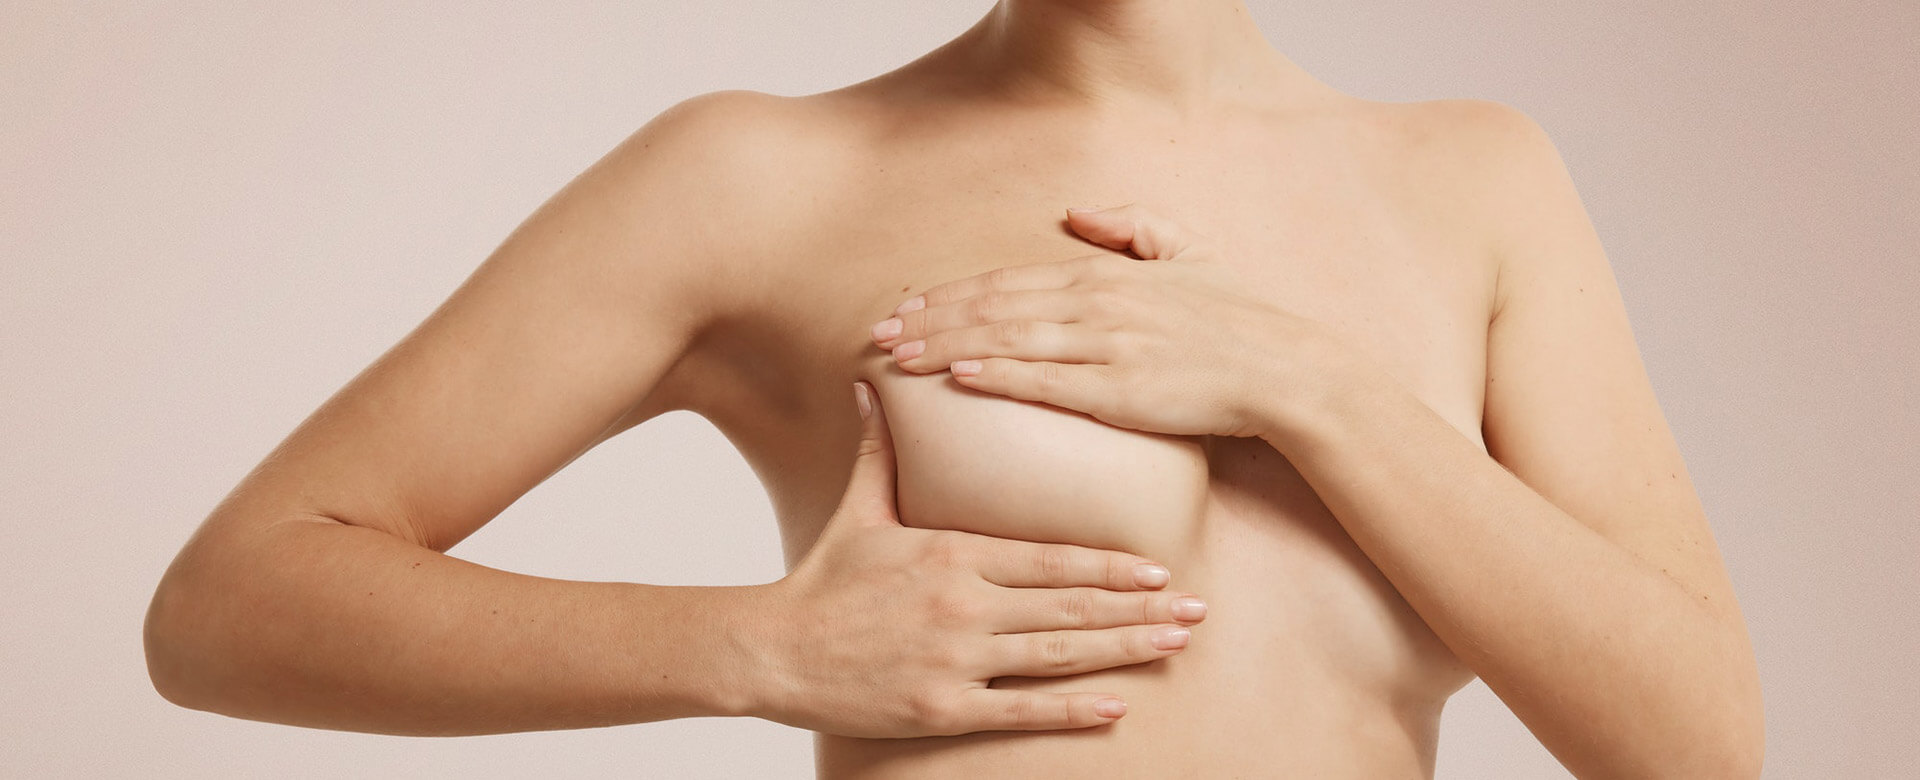 https://hyundaiaestheticsblog.com/wp-content/uploads/2021/09/hyundai-aesthetics-plastic-surgery-clinic-how-to-fix-uneven-breasts-with-breast-surgery.jpg